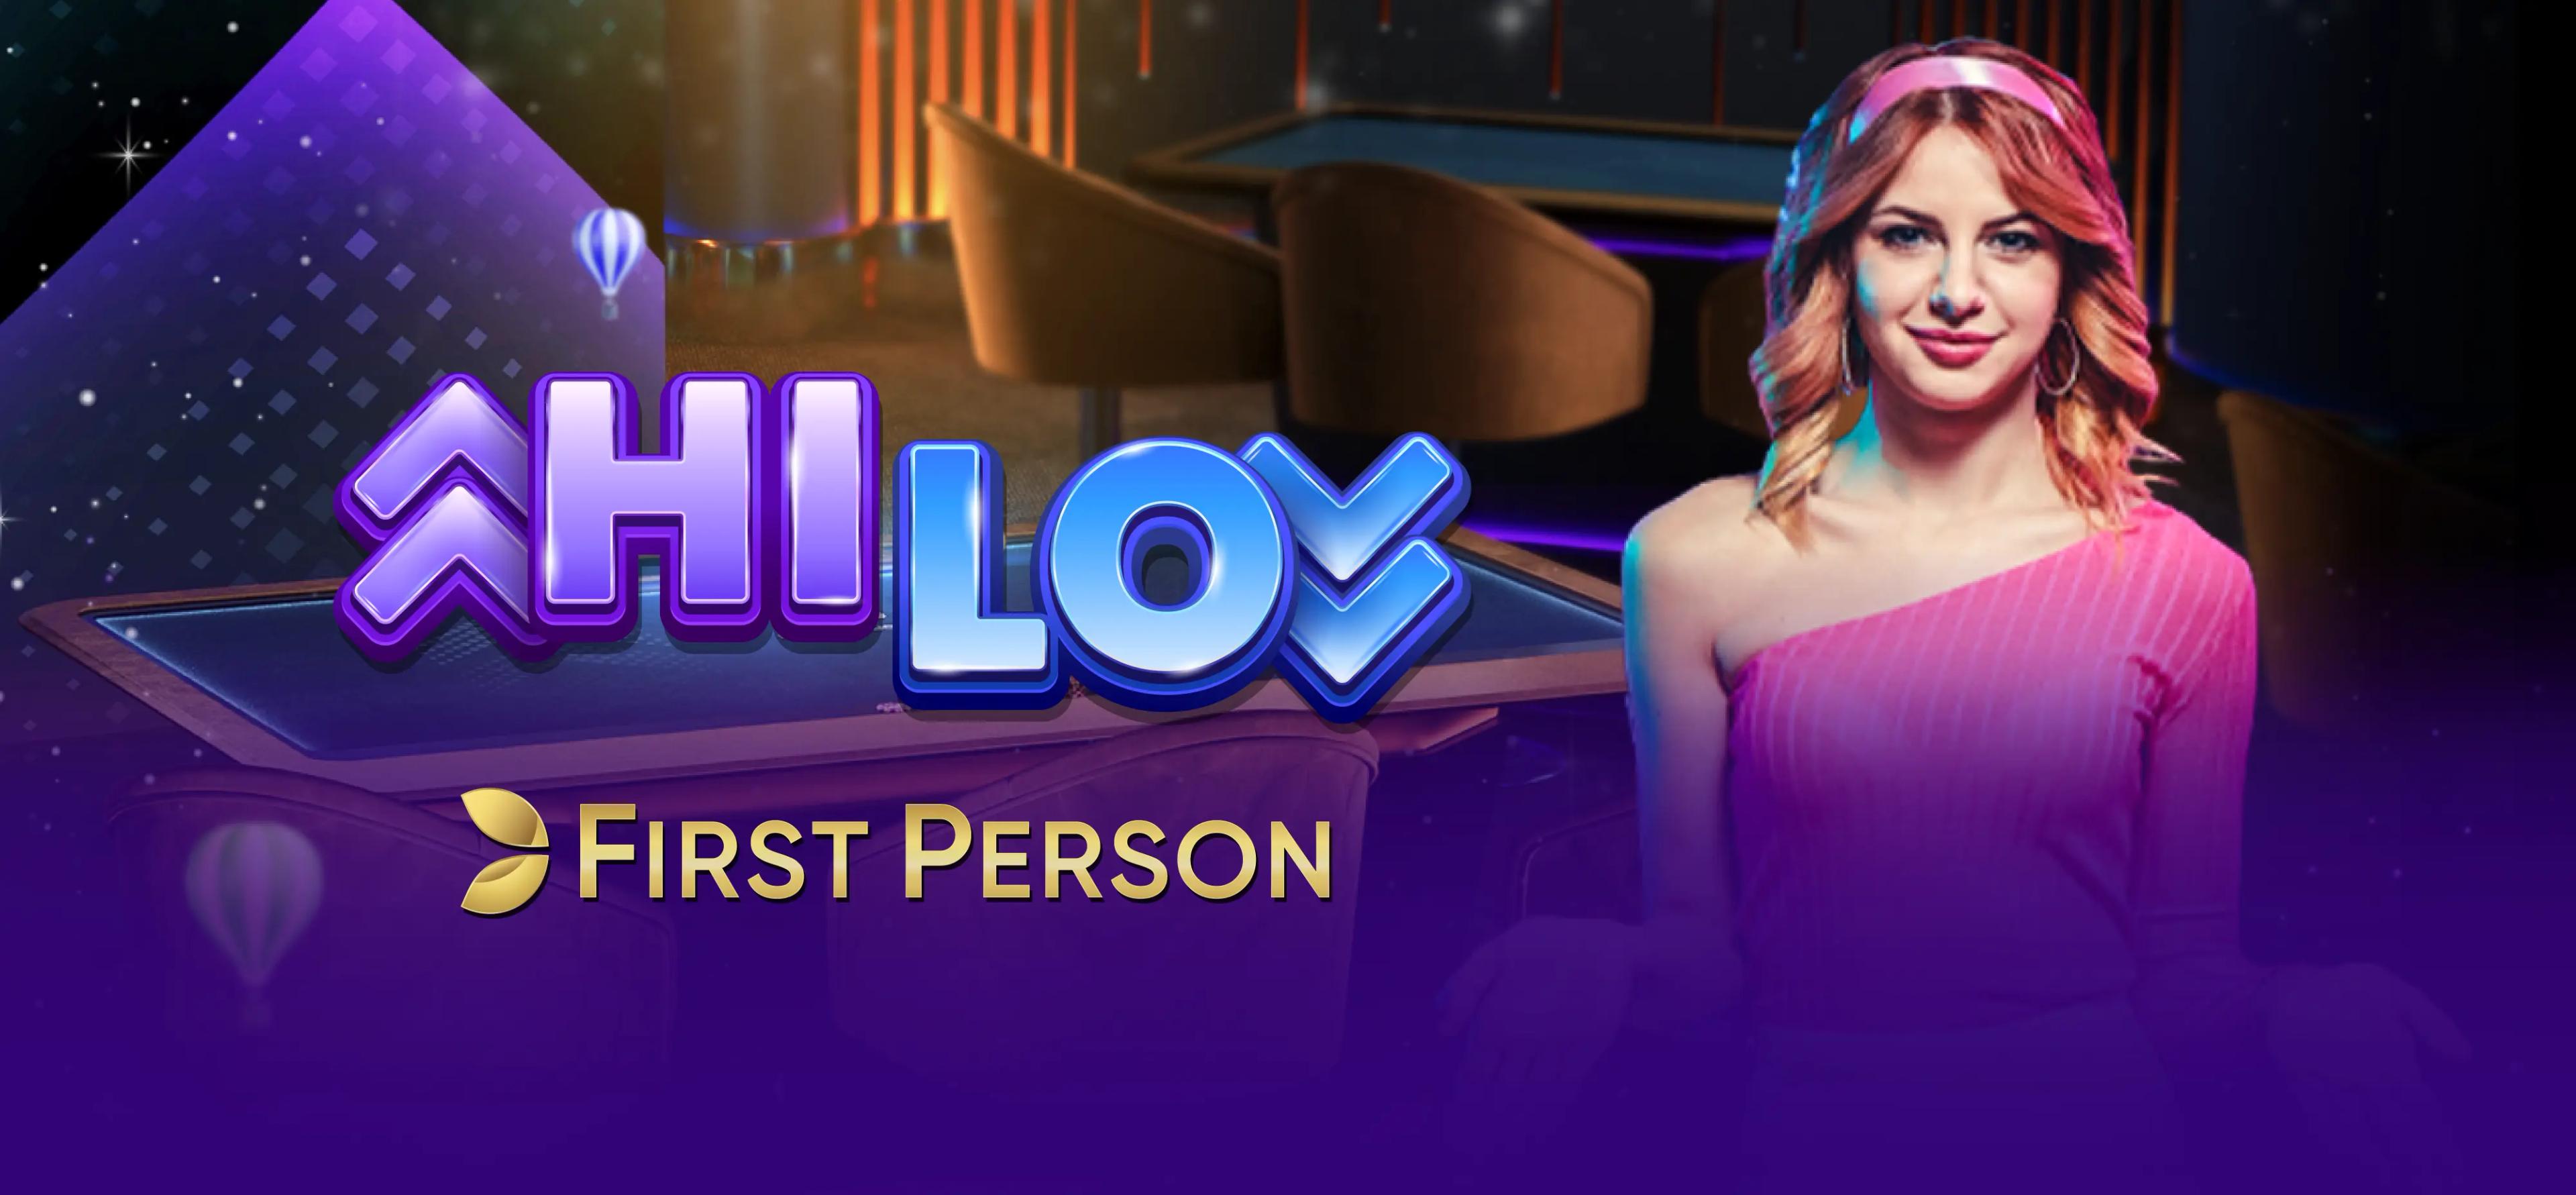 First Person HiLo